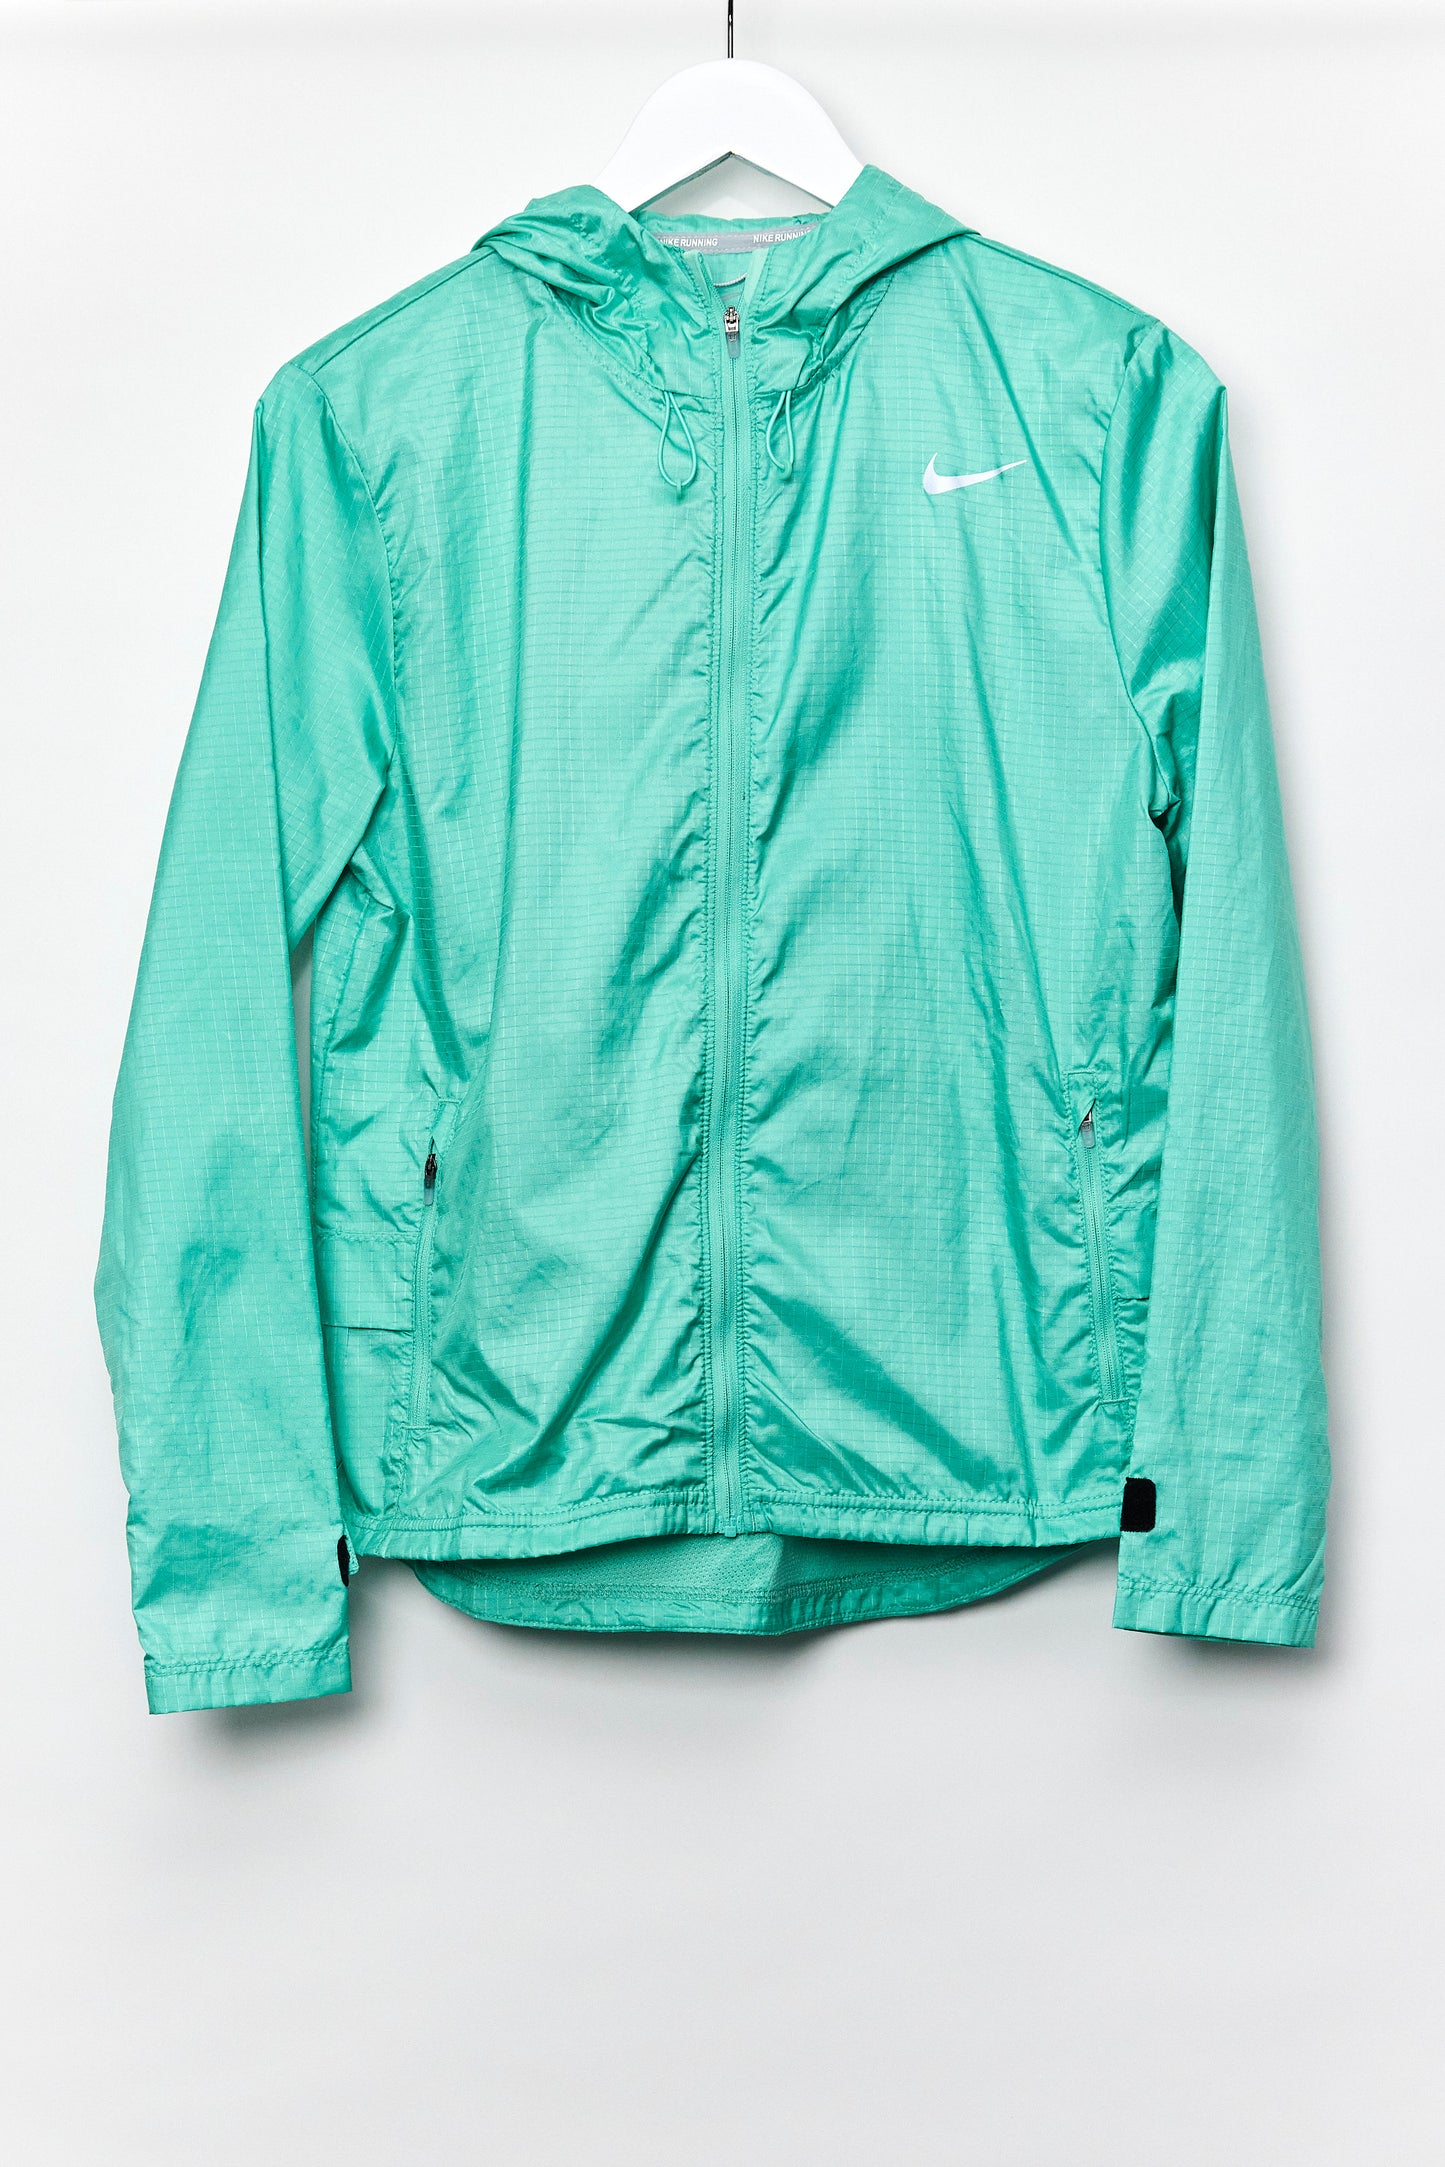 Womens Nike Sport Green jacket size small